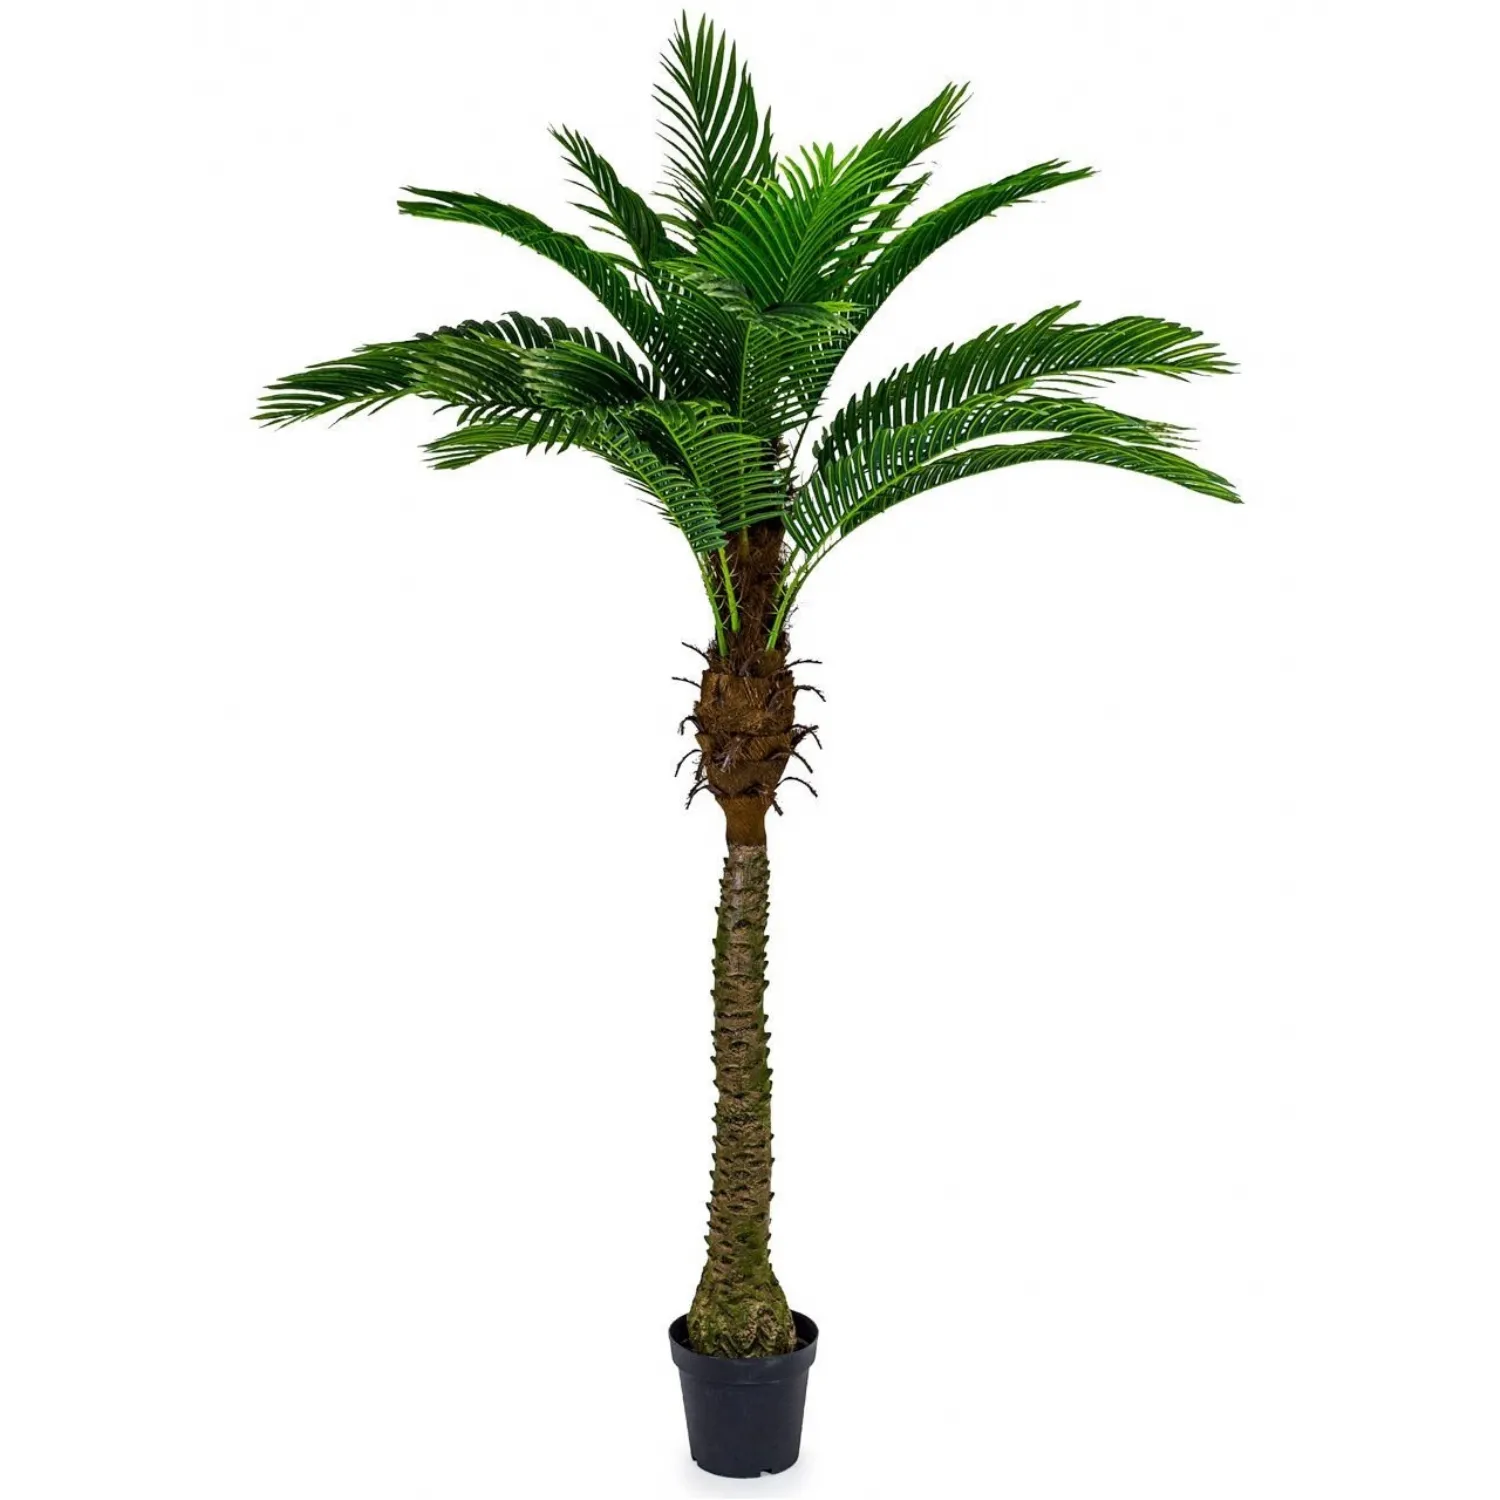 Ornamental Large Palm Tree In Black Pot